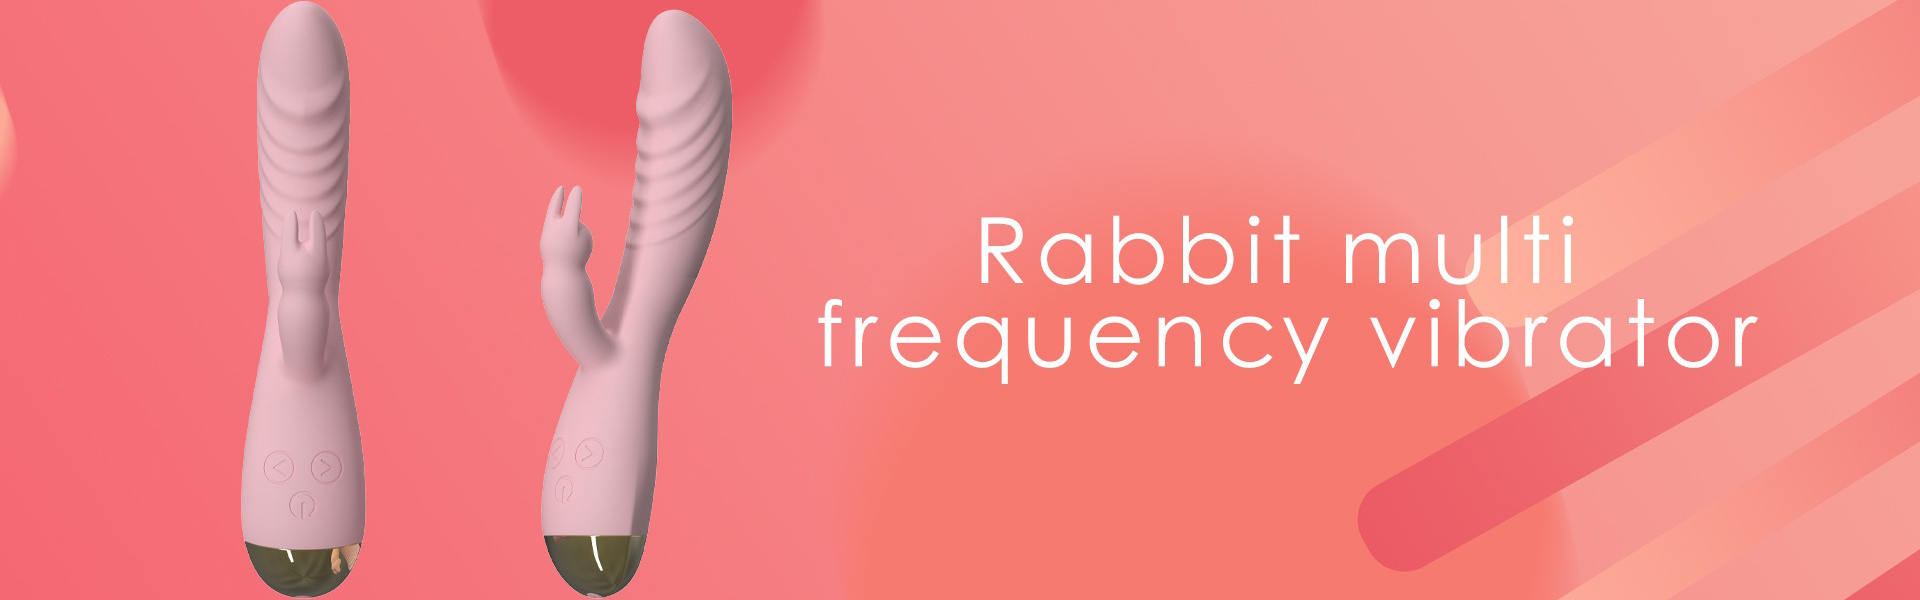 Rabbit multi frequency vibrator